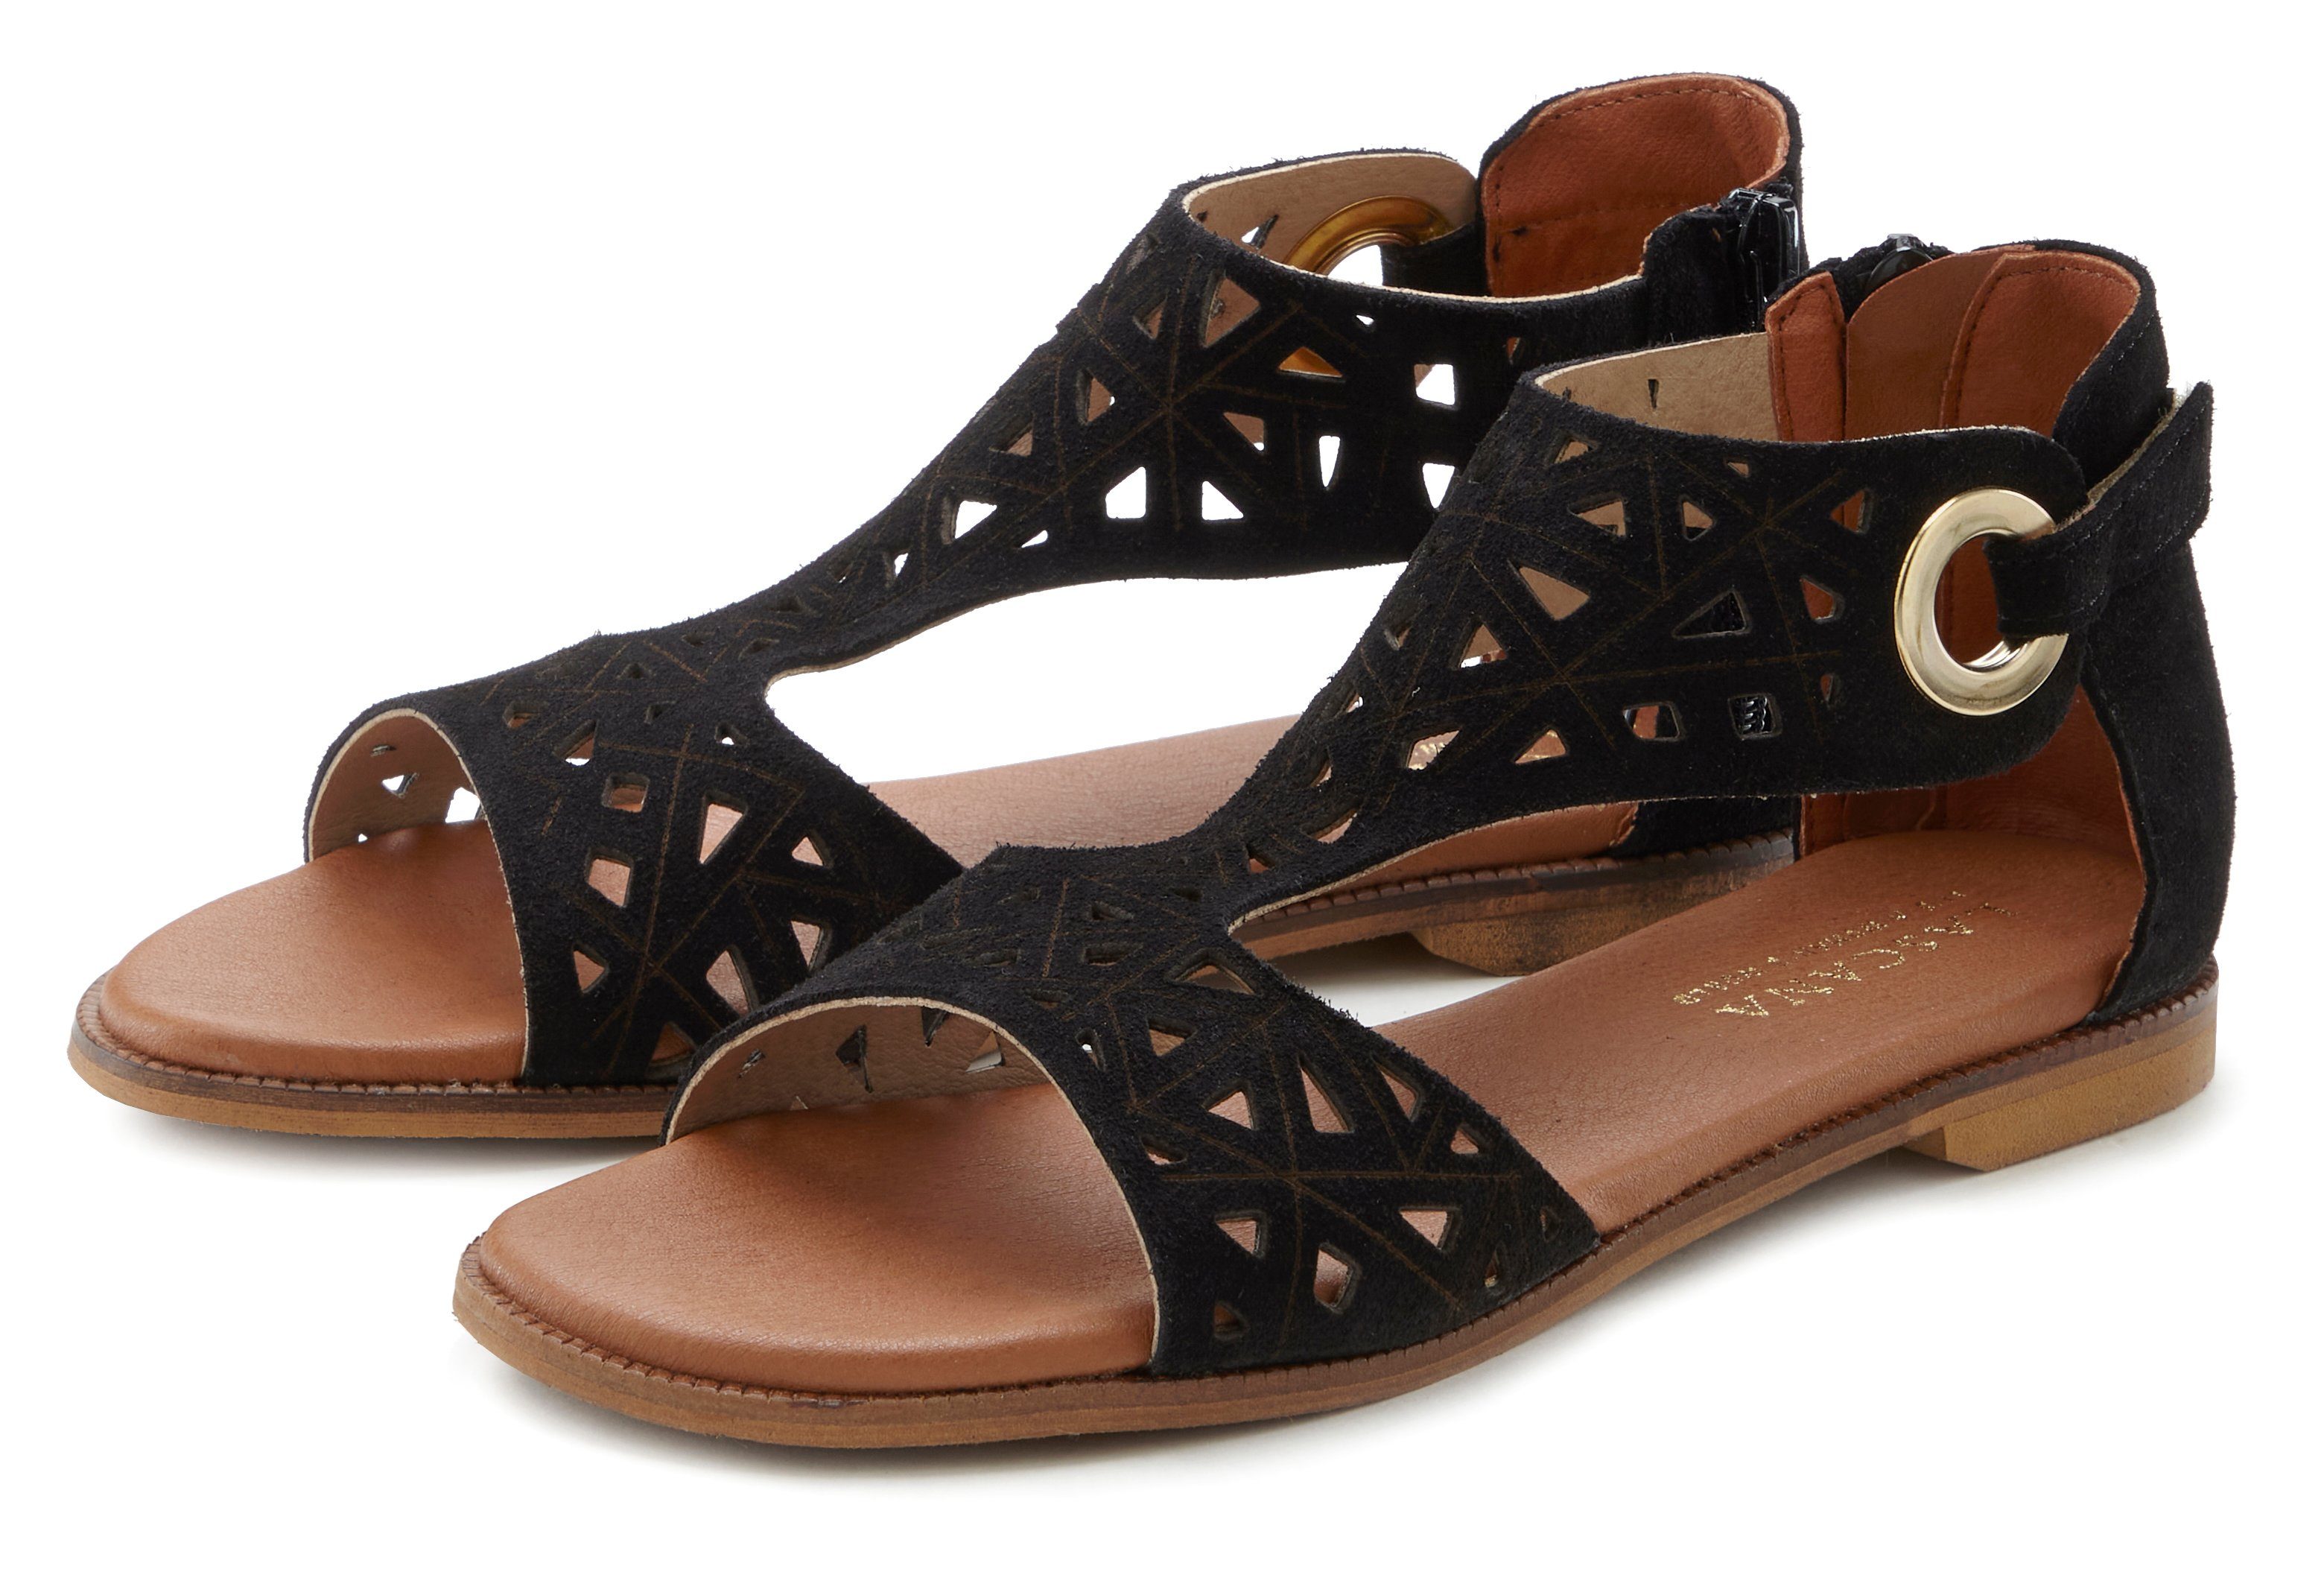 LASCANA Sandale Sandalette, Sommerschuh aus Cut-Outs schwarz hochwertigem Leder mit